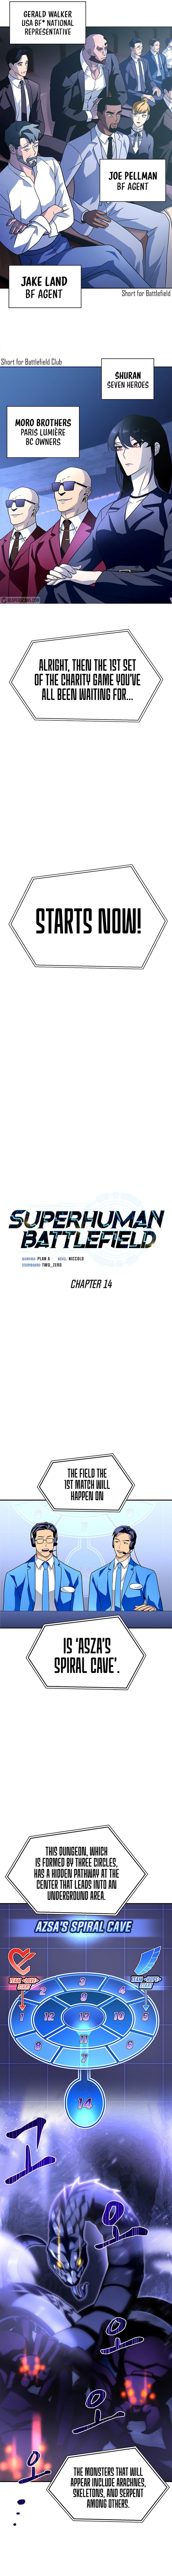 Superhuman Battlefield - Chapter 14 Page 3